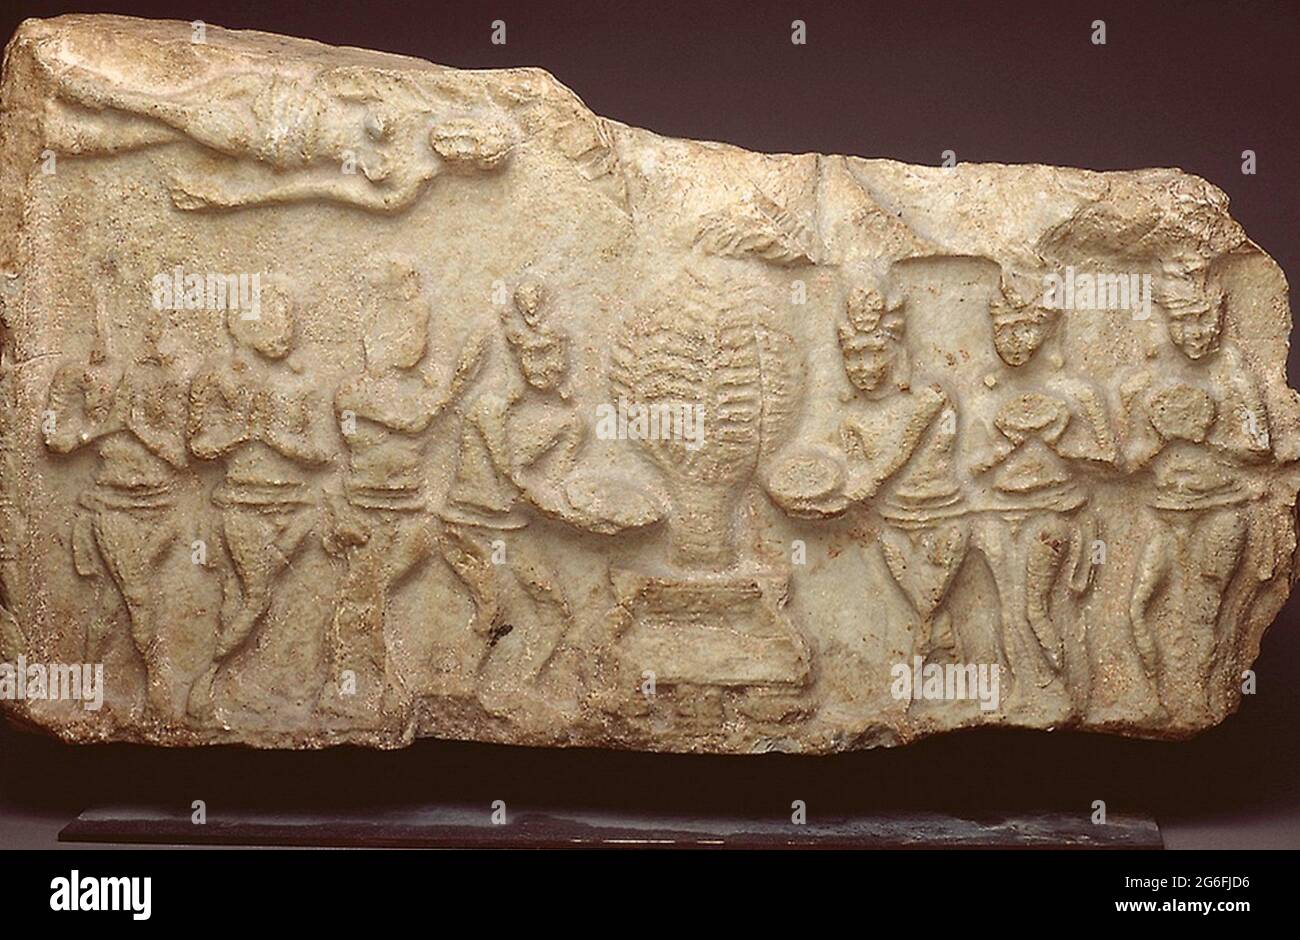 Veneration of the Bodhi Tree - 3rd century - India Andhra Pradesh. Limestone. 201 AD - 300 AD. Nagarjunakonda. Stock Photo